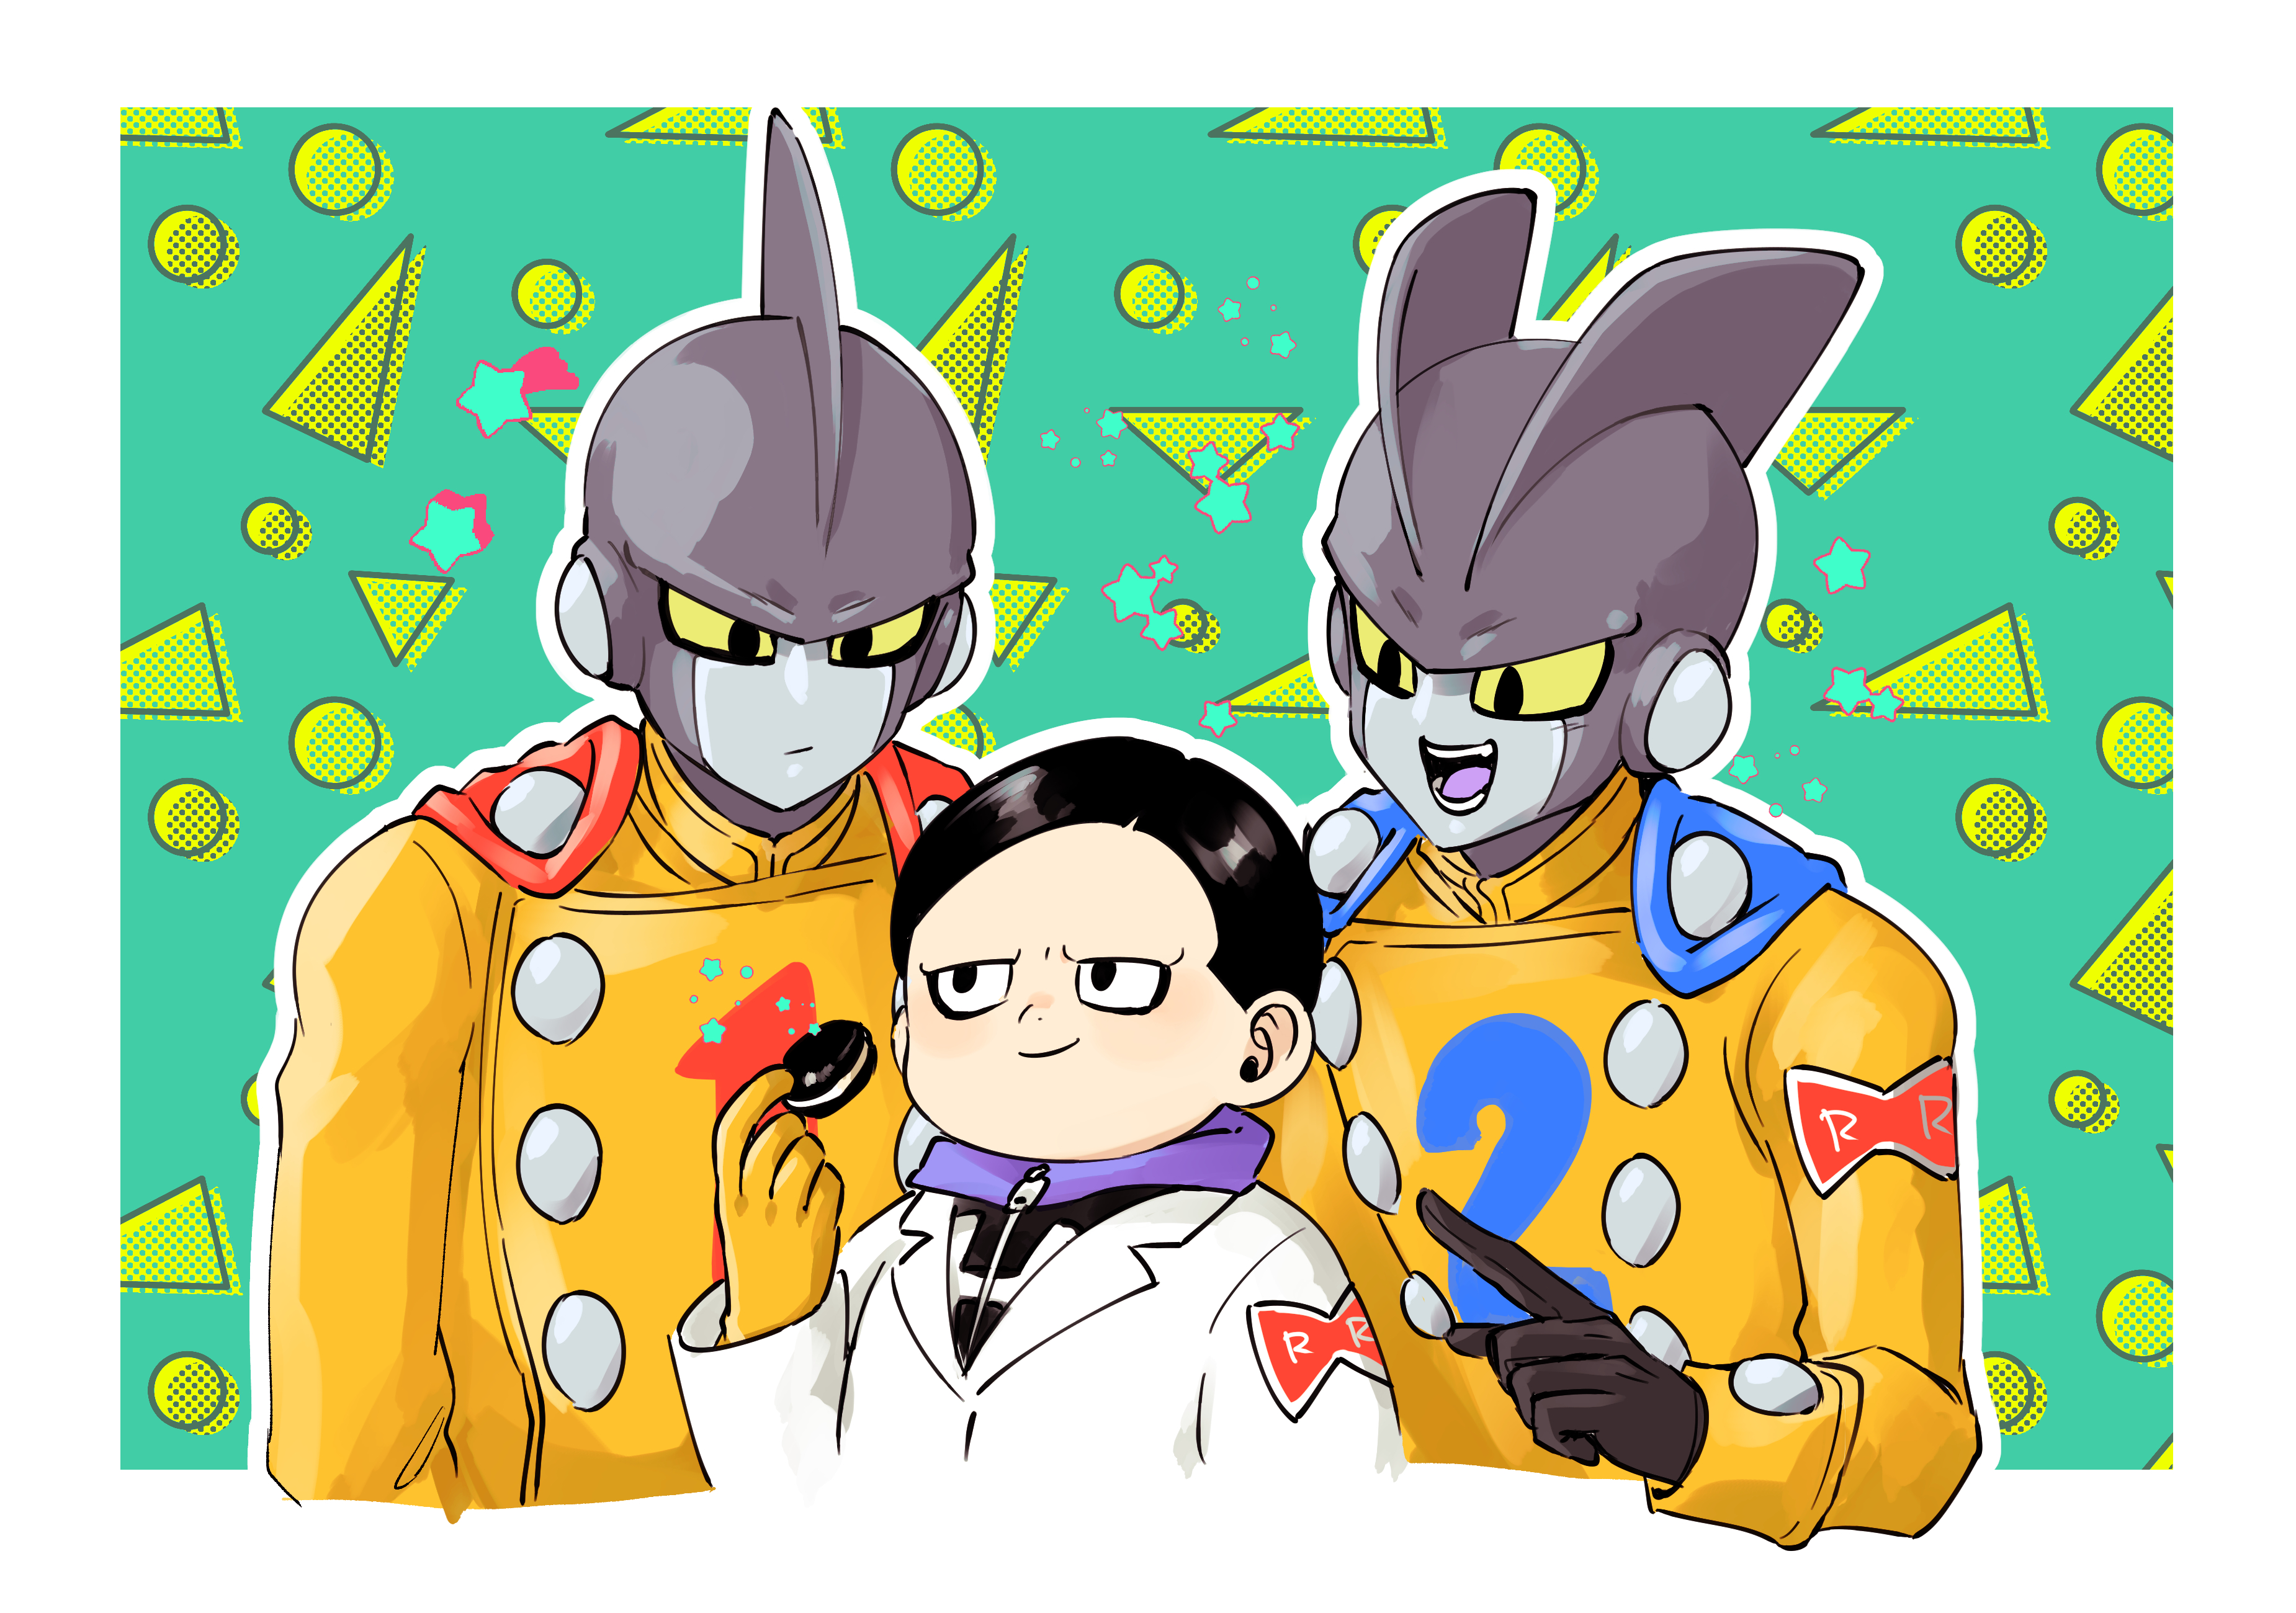 Anime Dragon Ball Super: Super Hero HD Wallpaper | Background Image